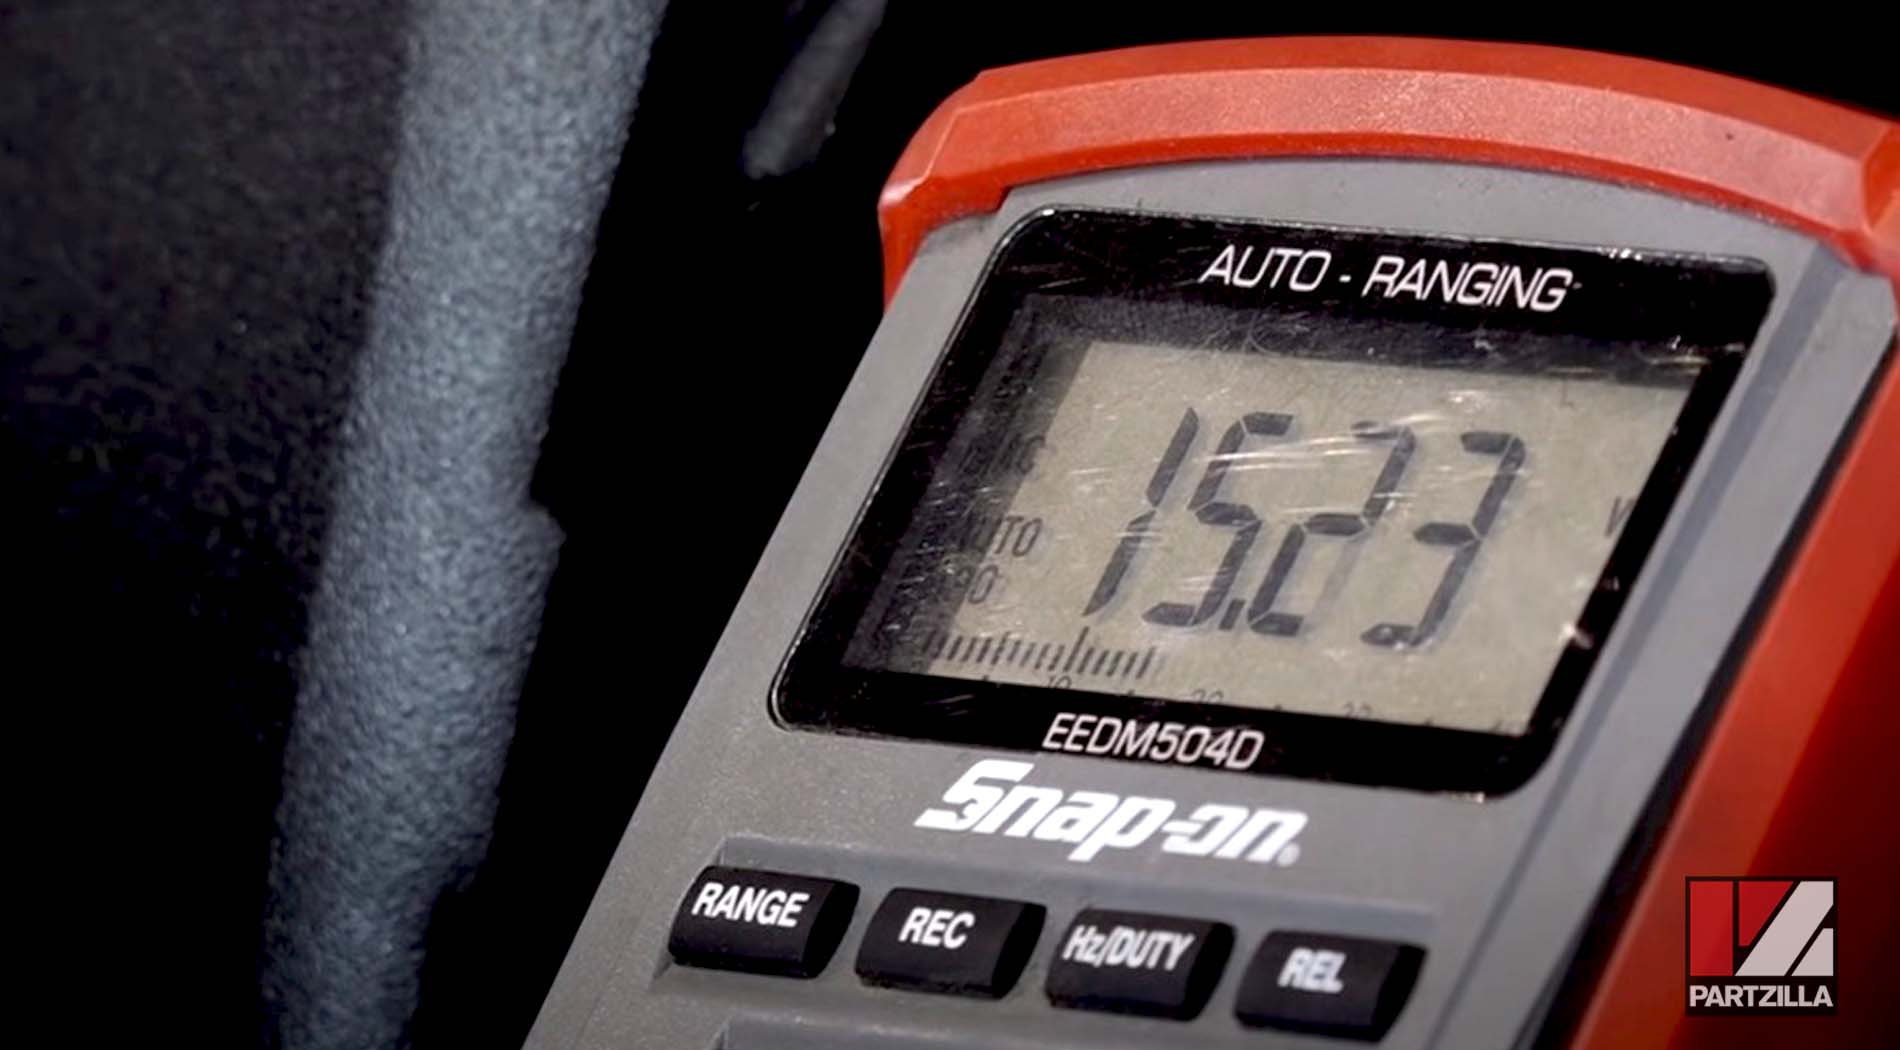 Honda CBR 600 charging system troubleshooting testing